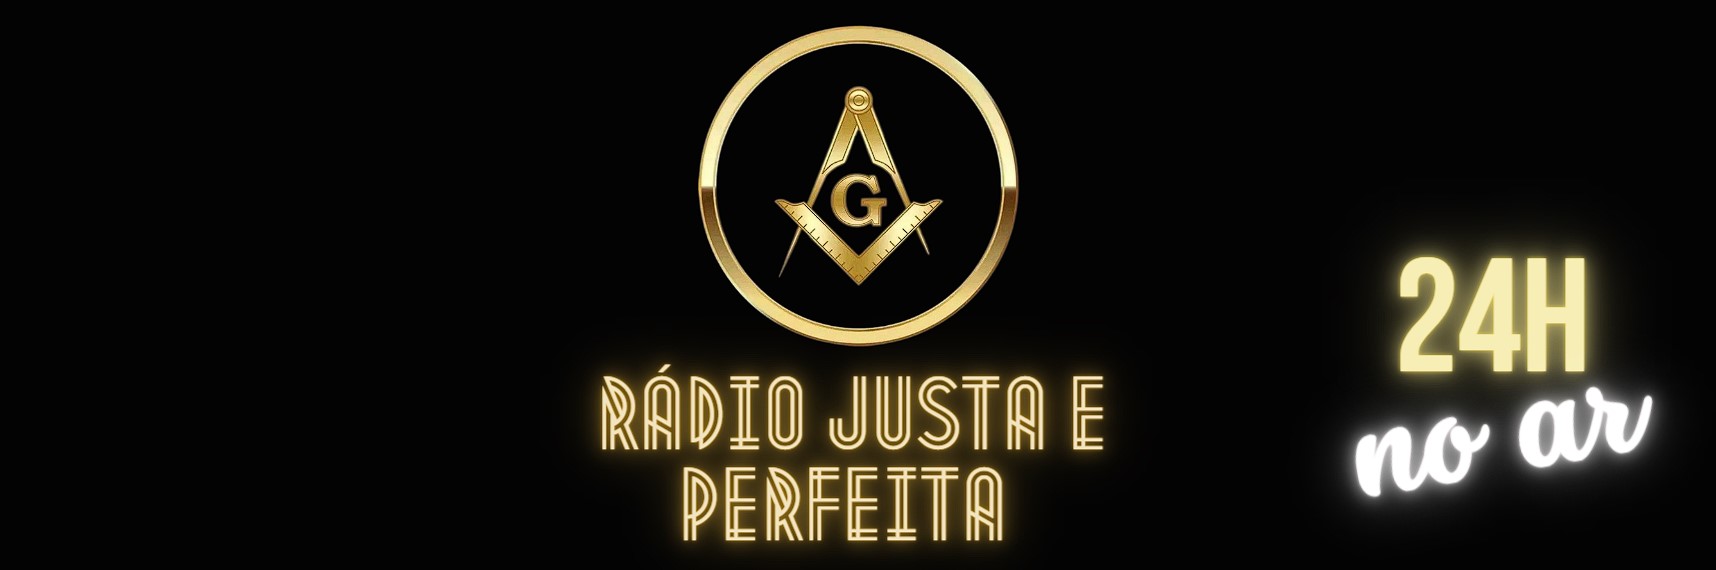 Rádio Justa e Perfeita